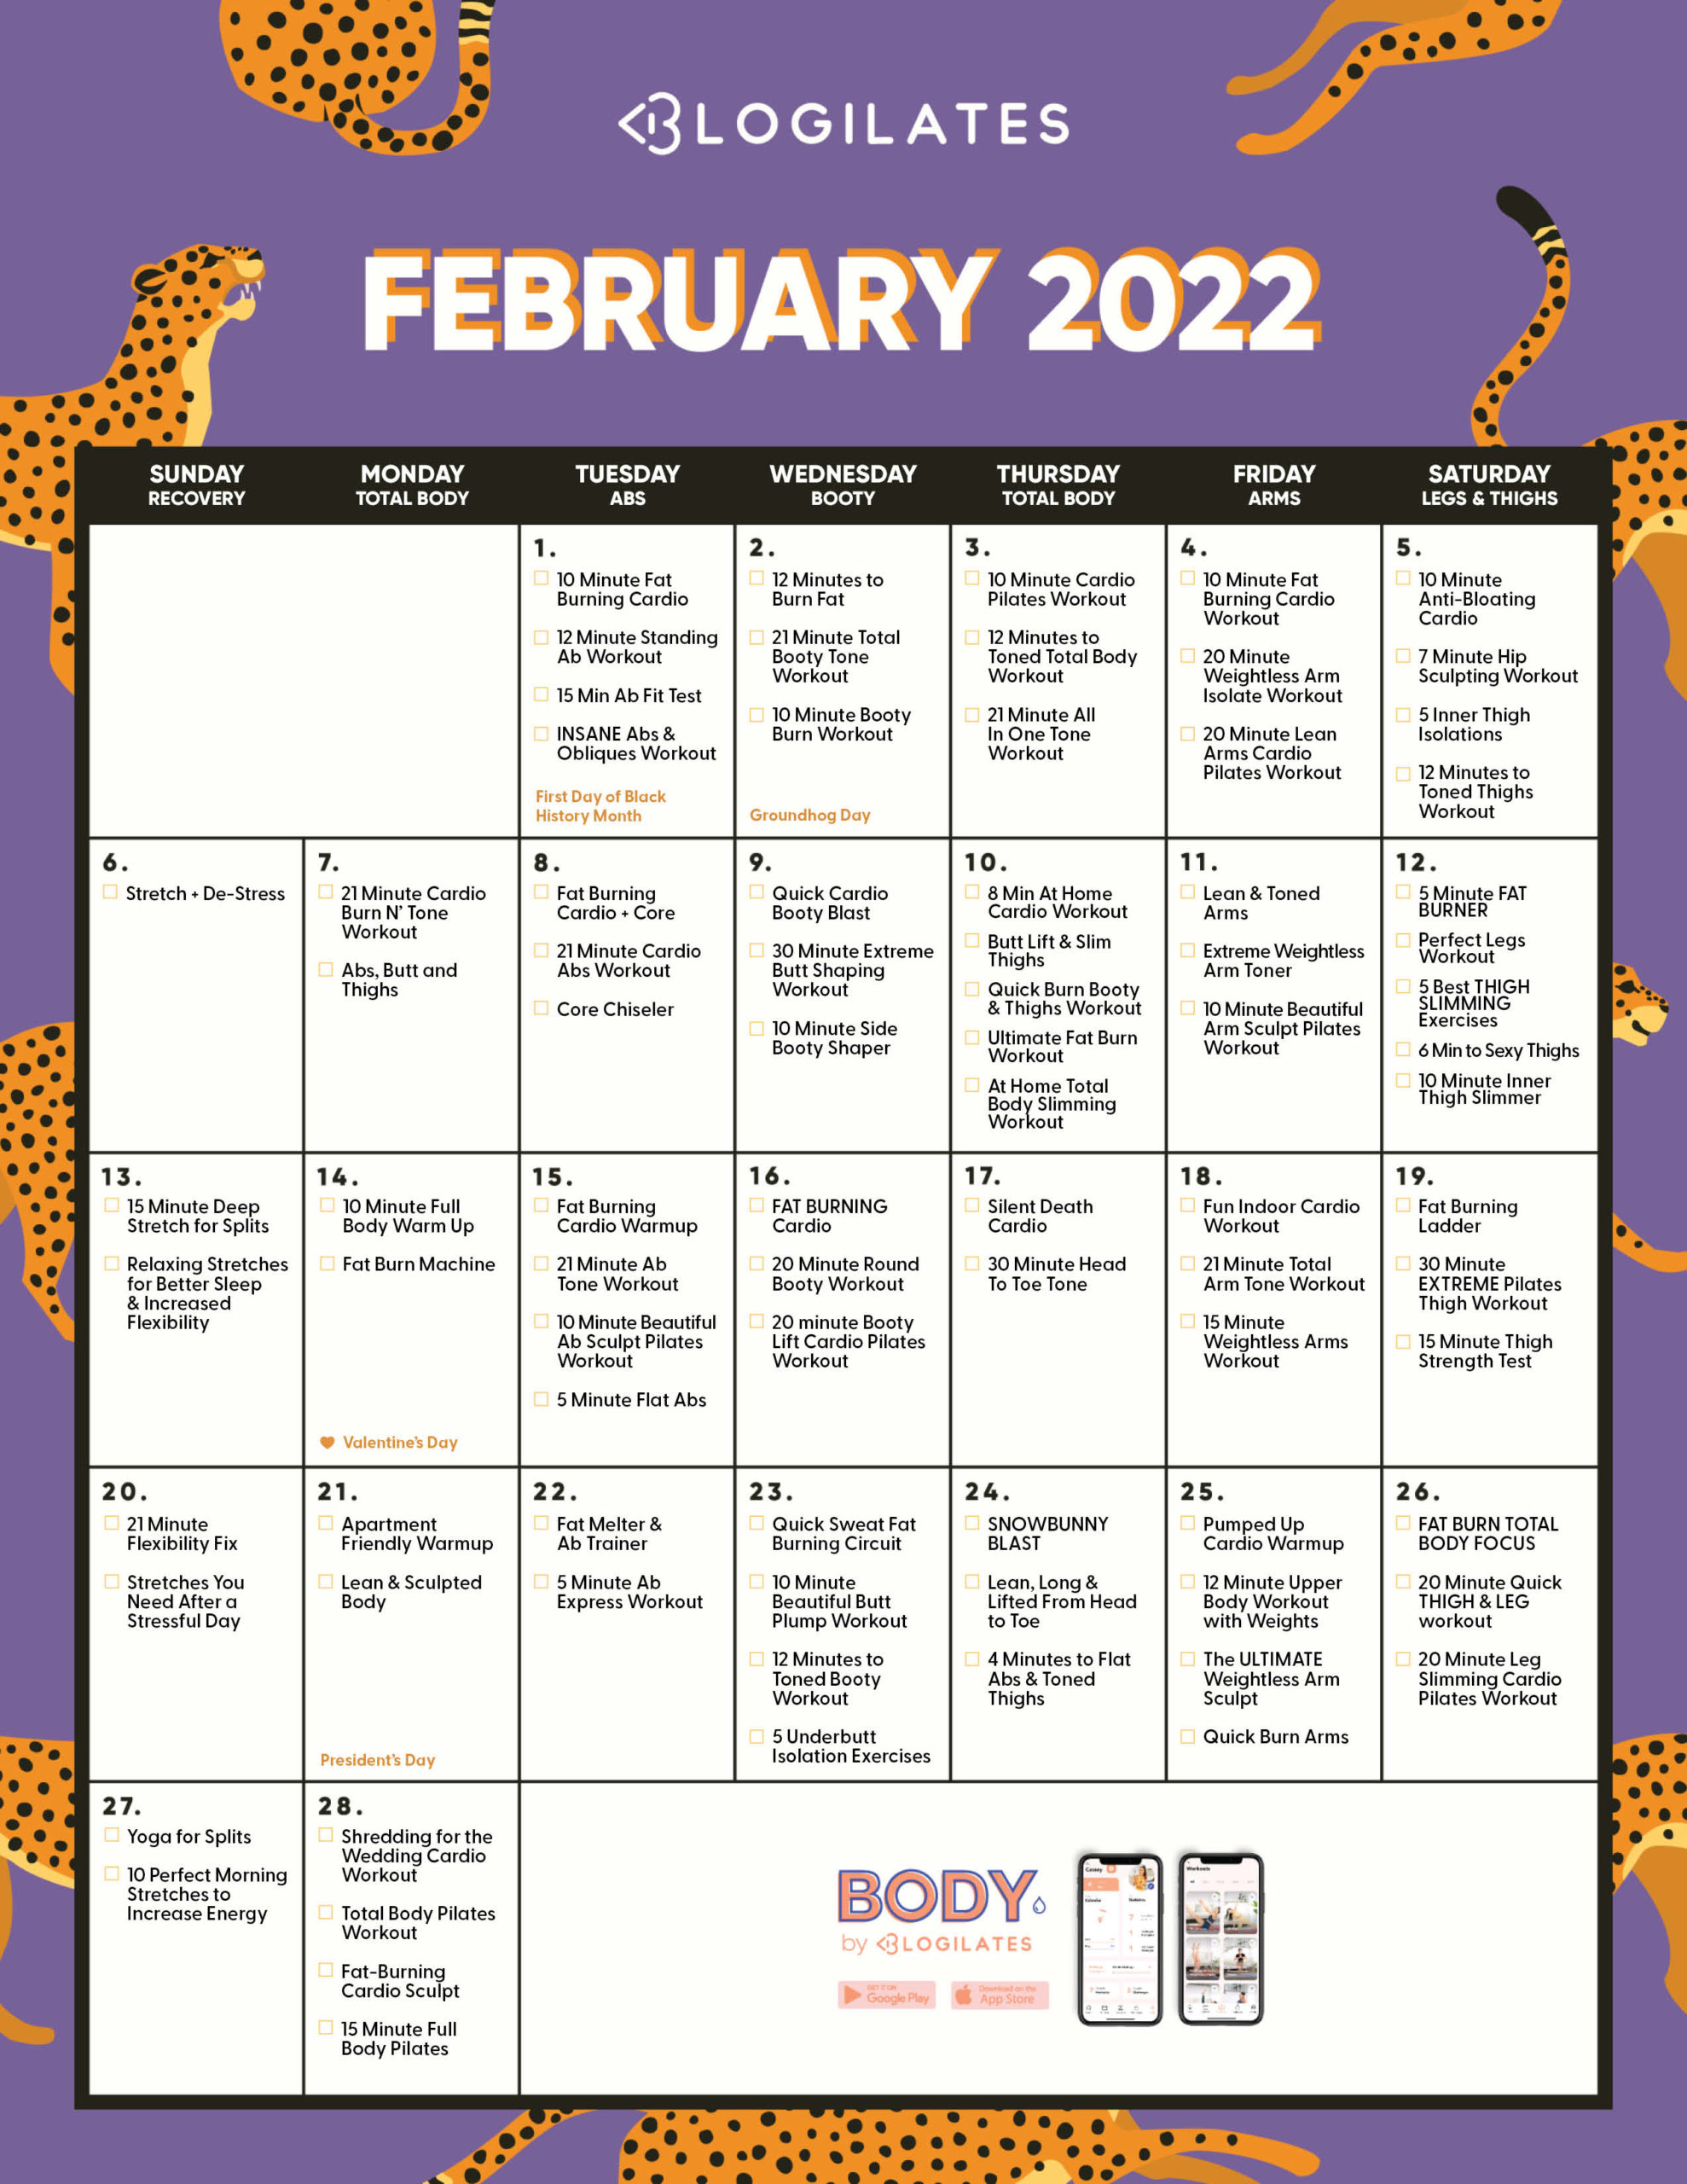 Feb Calendar 2022 The Blogilates February 2022 Workout Calendar! - Blogilates